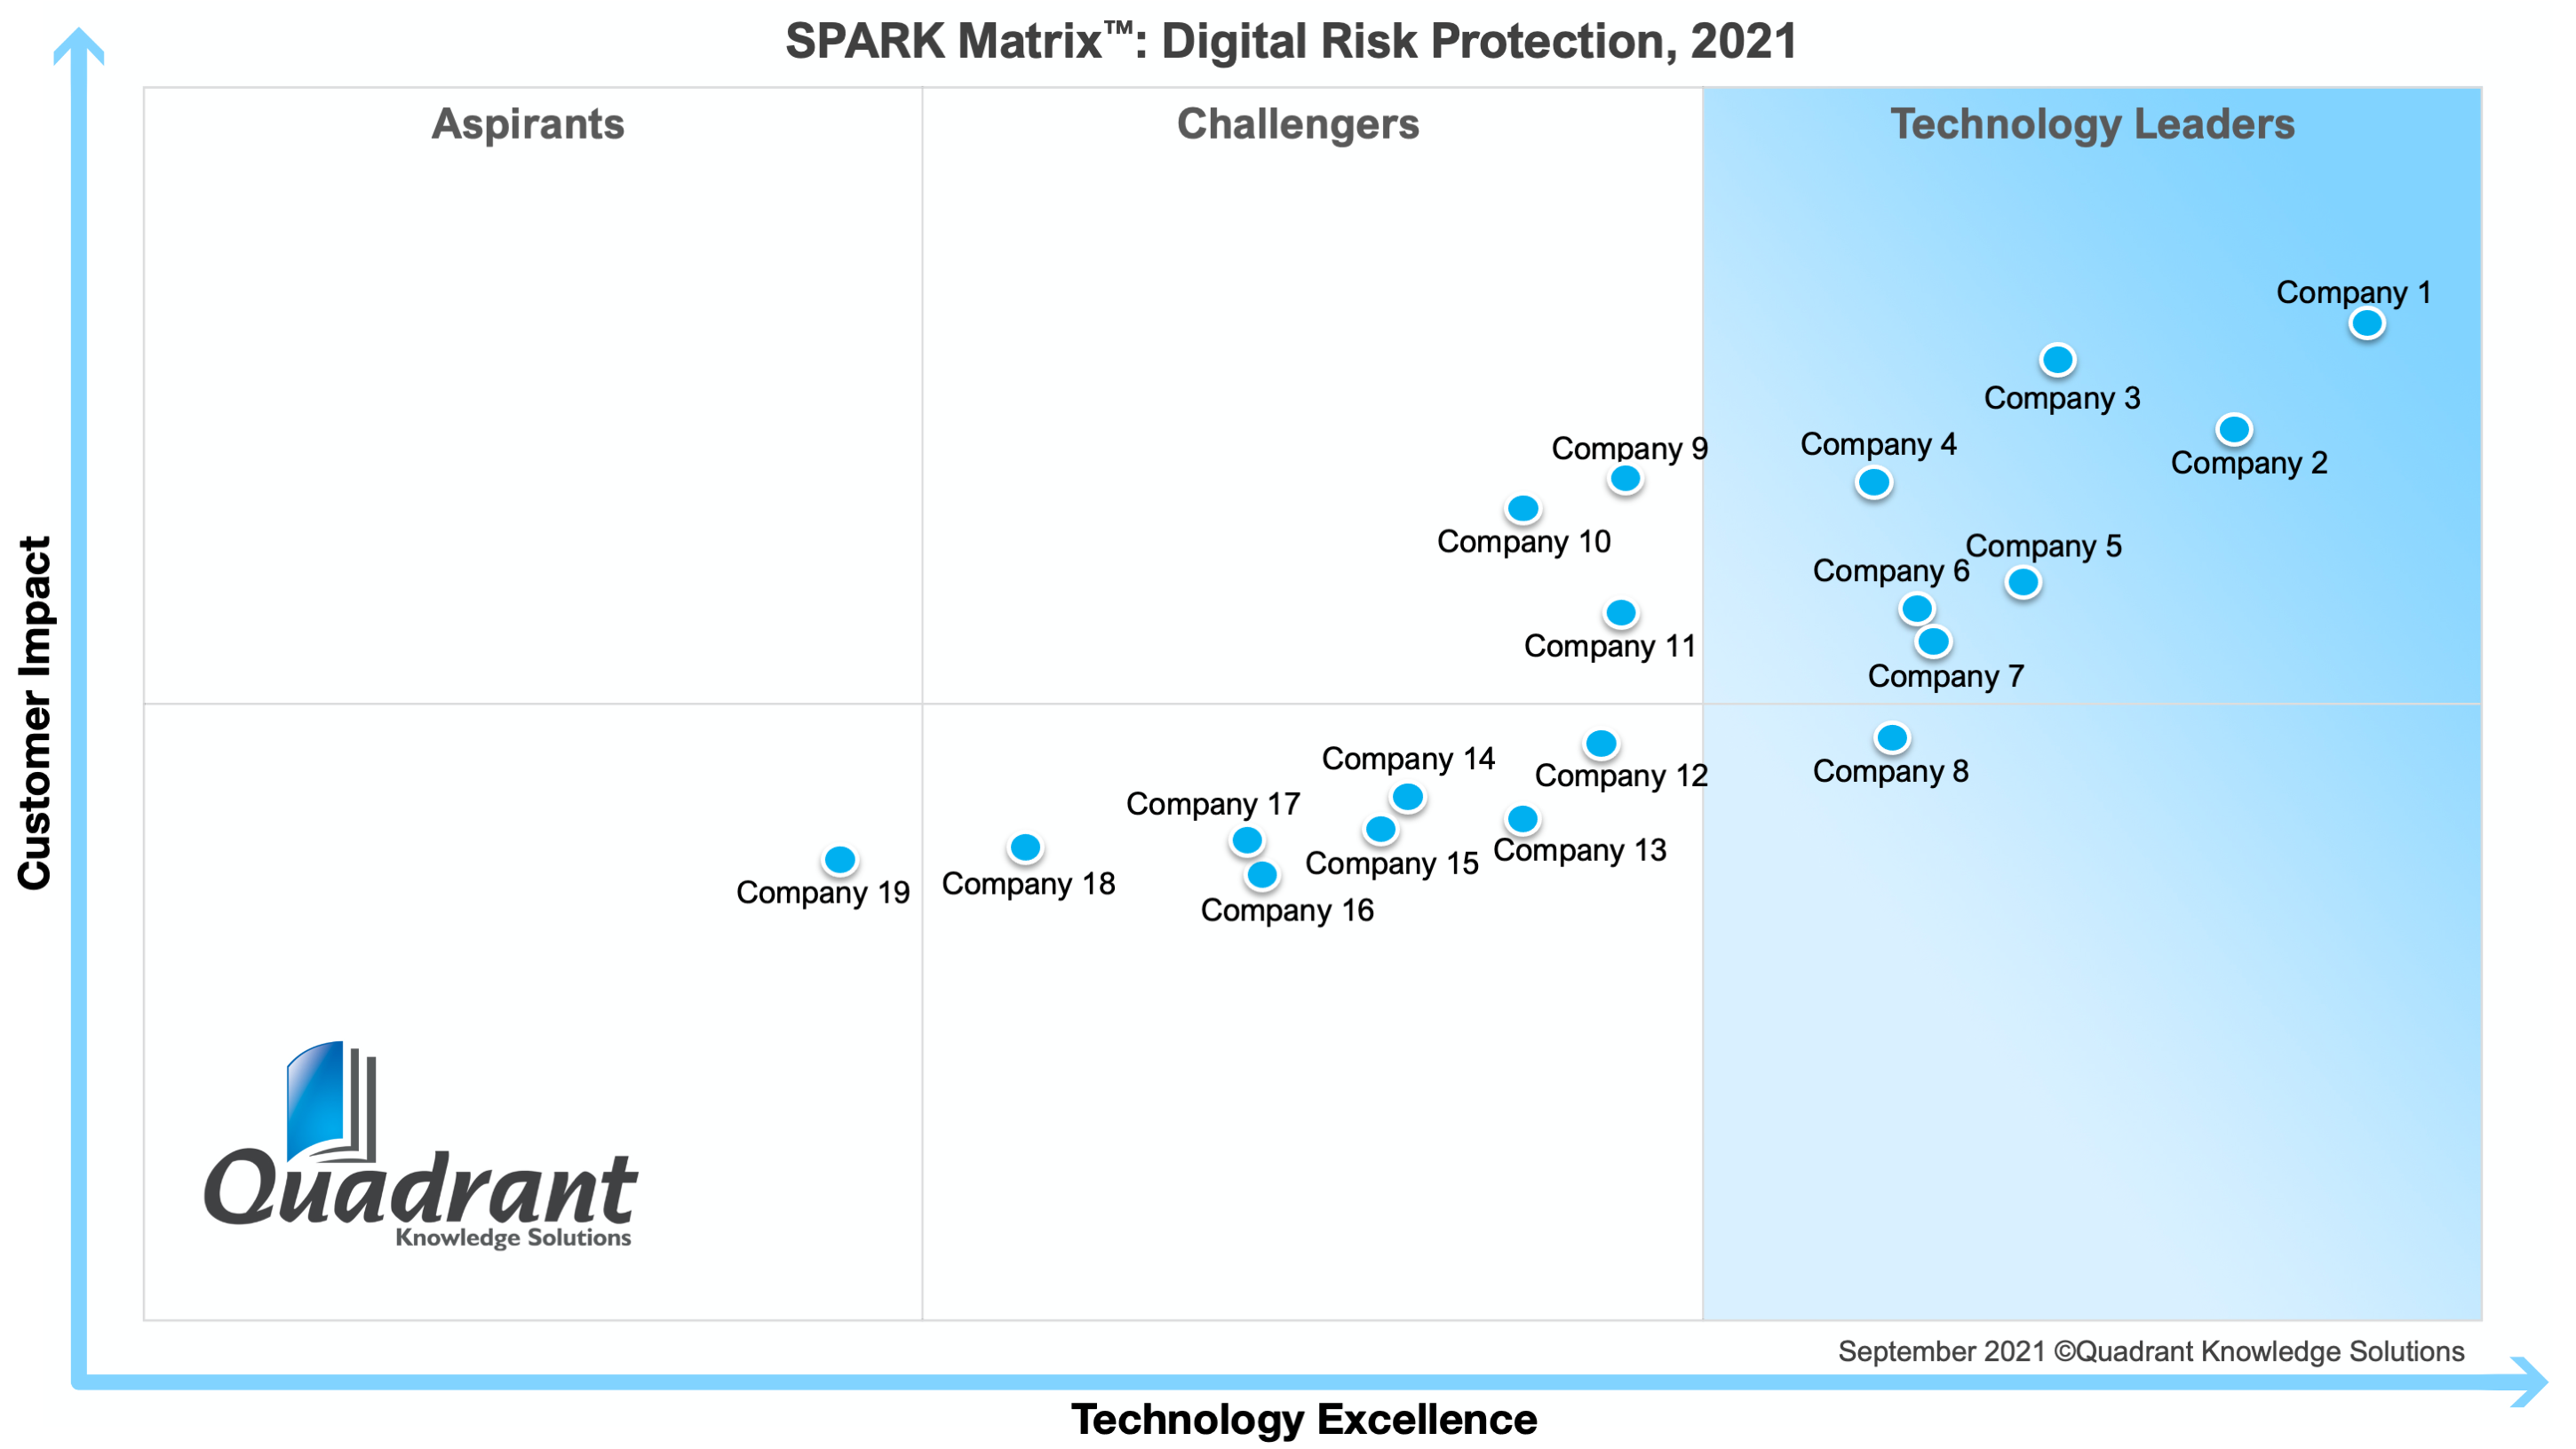 2021 SPARK Matrix Digital Risk Protection (DRP) 2021 Quadrant Knowledge Solutions